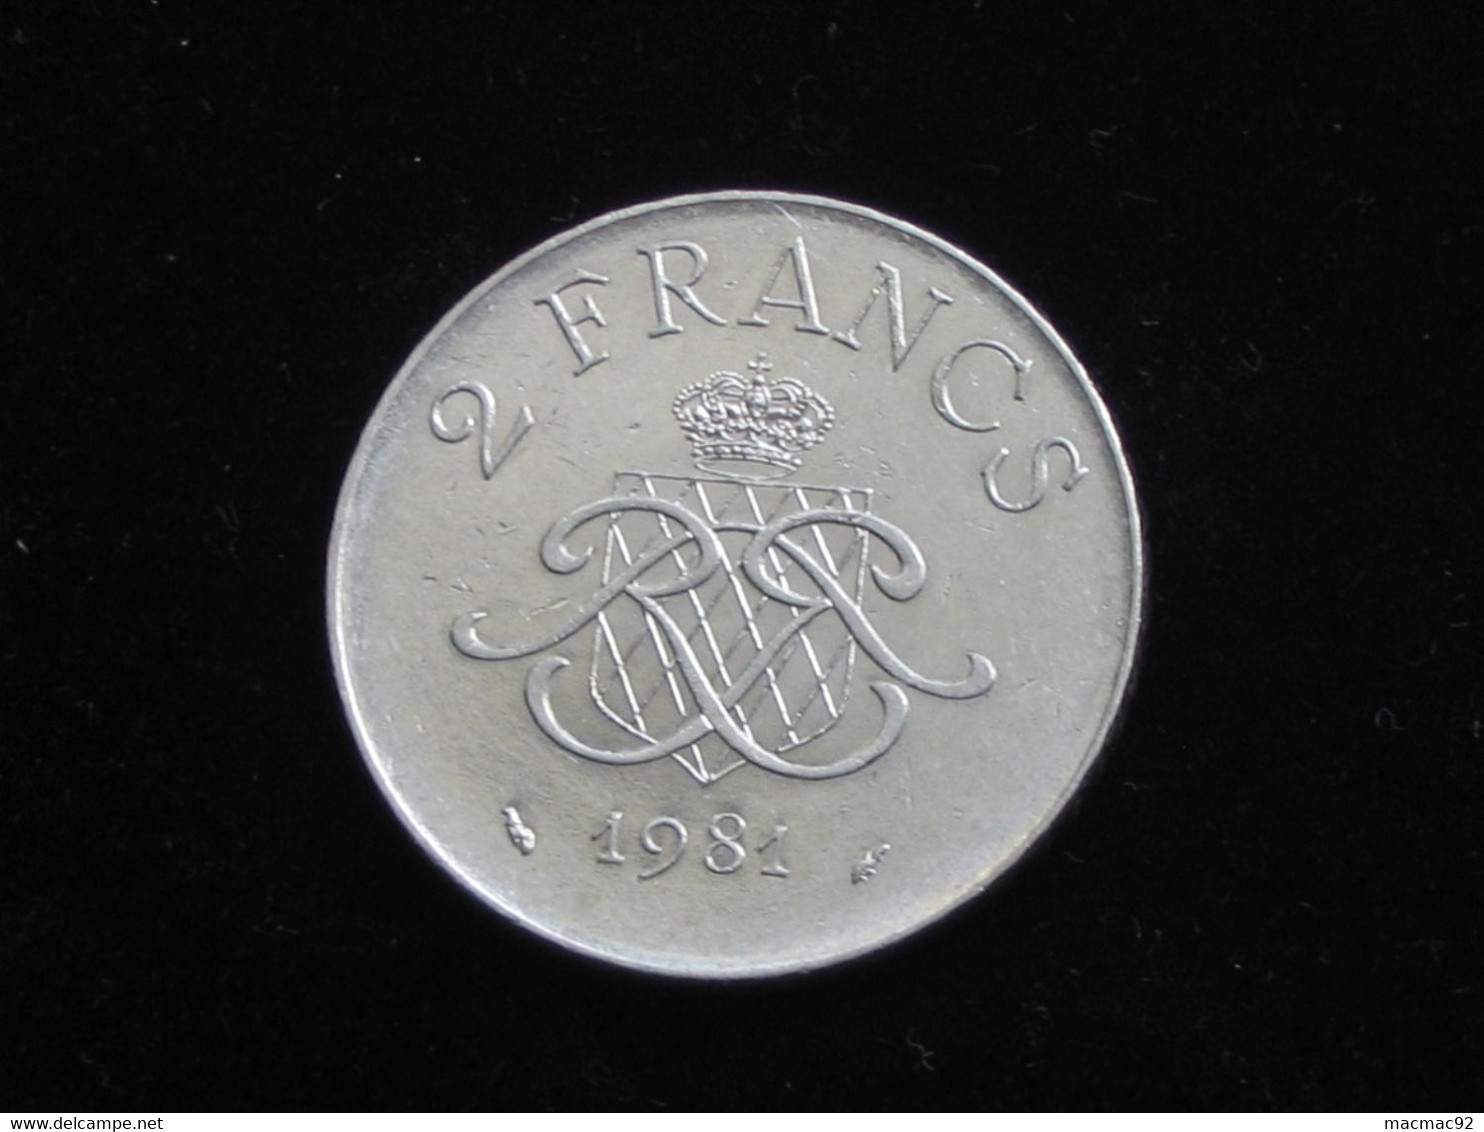 MONACO - 2 Francs 1981 - Rainier III Prince De Monaco **** EN ACHAT IMMEDIAT **** - 1949-1956 Anciens Francs